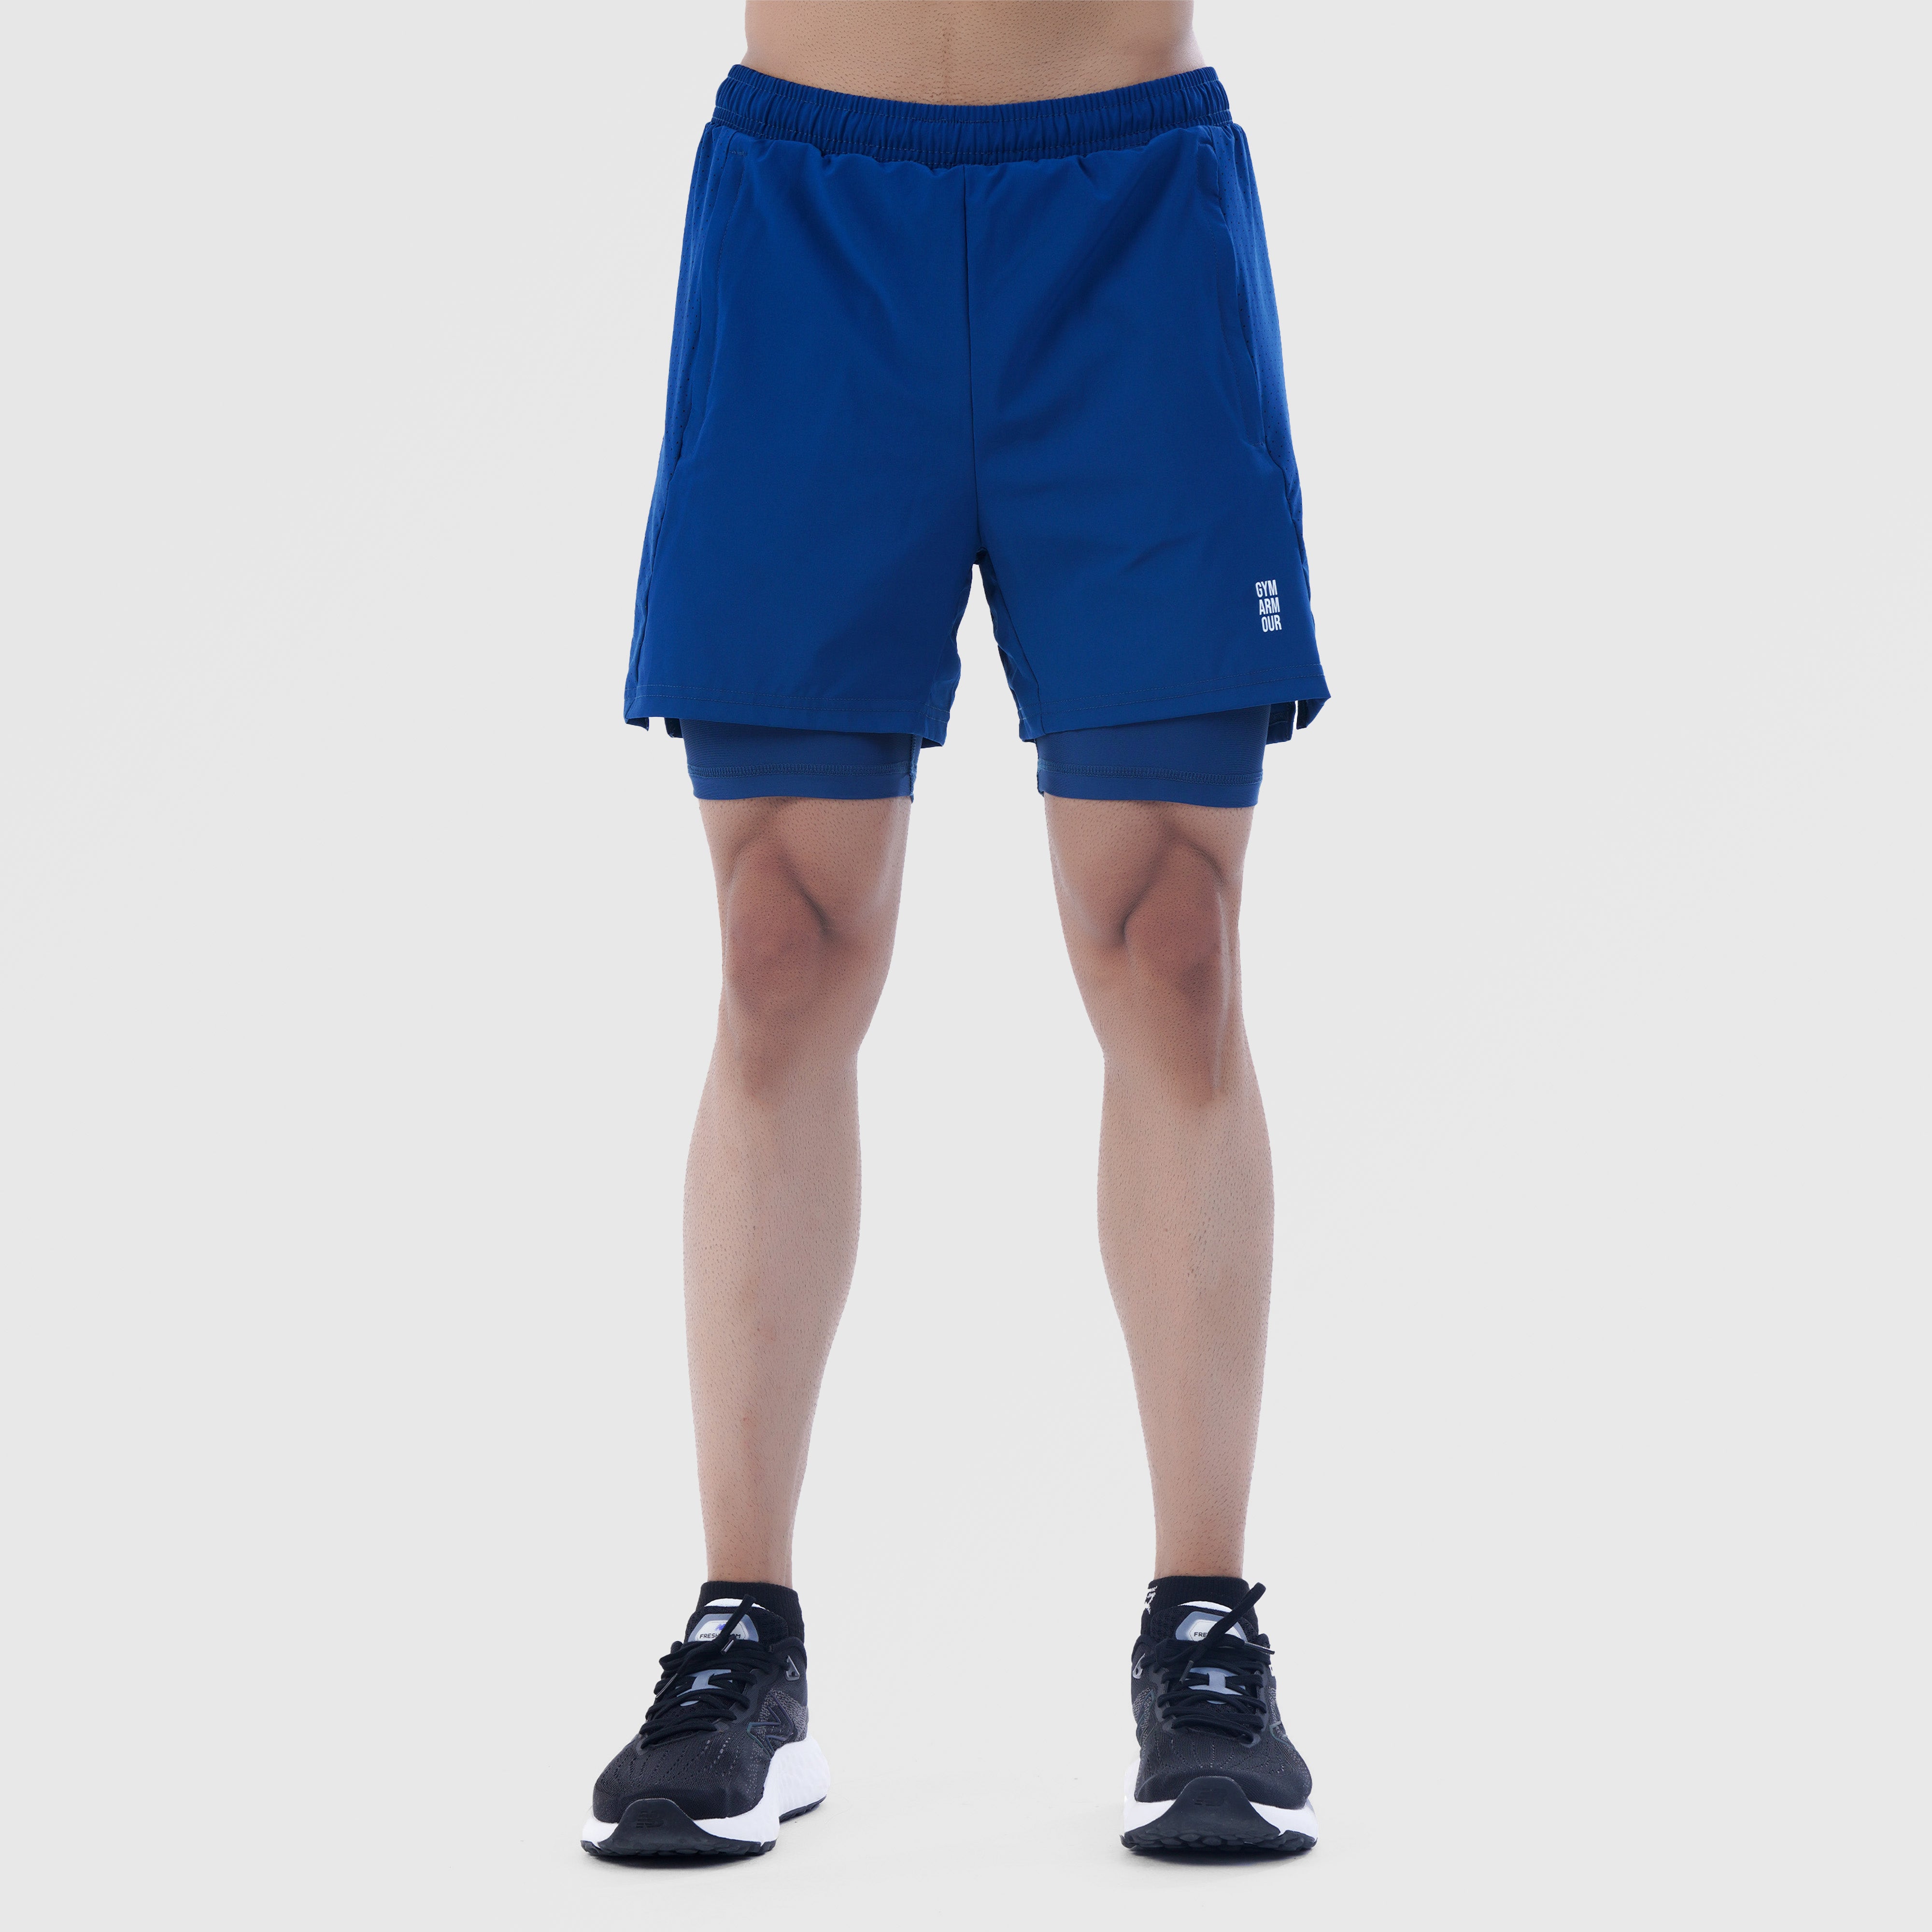 Laser Grip Shorts (Imperial Blue)